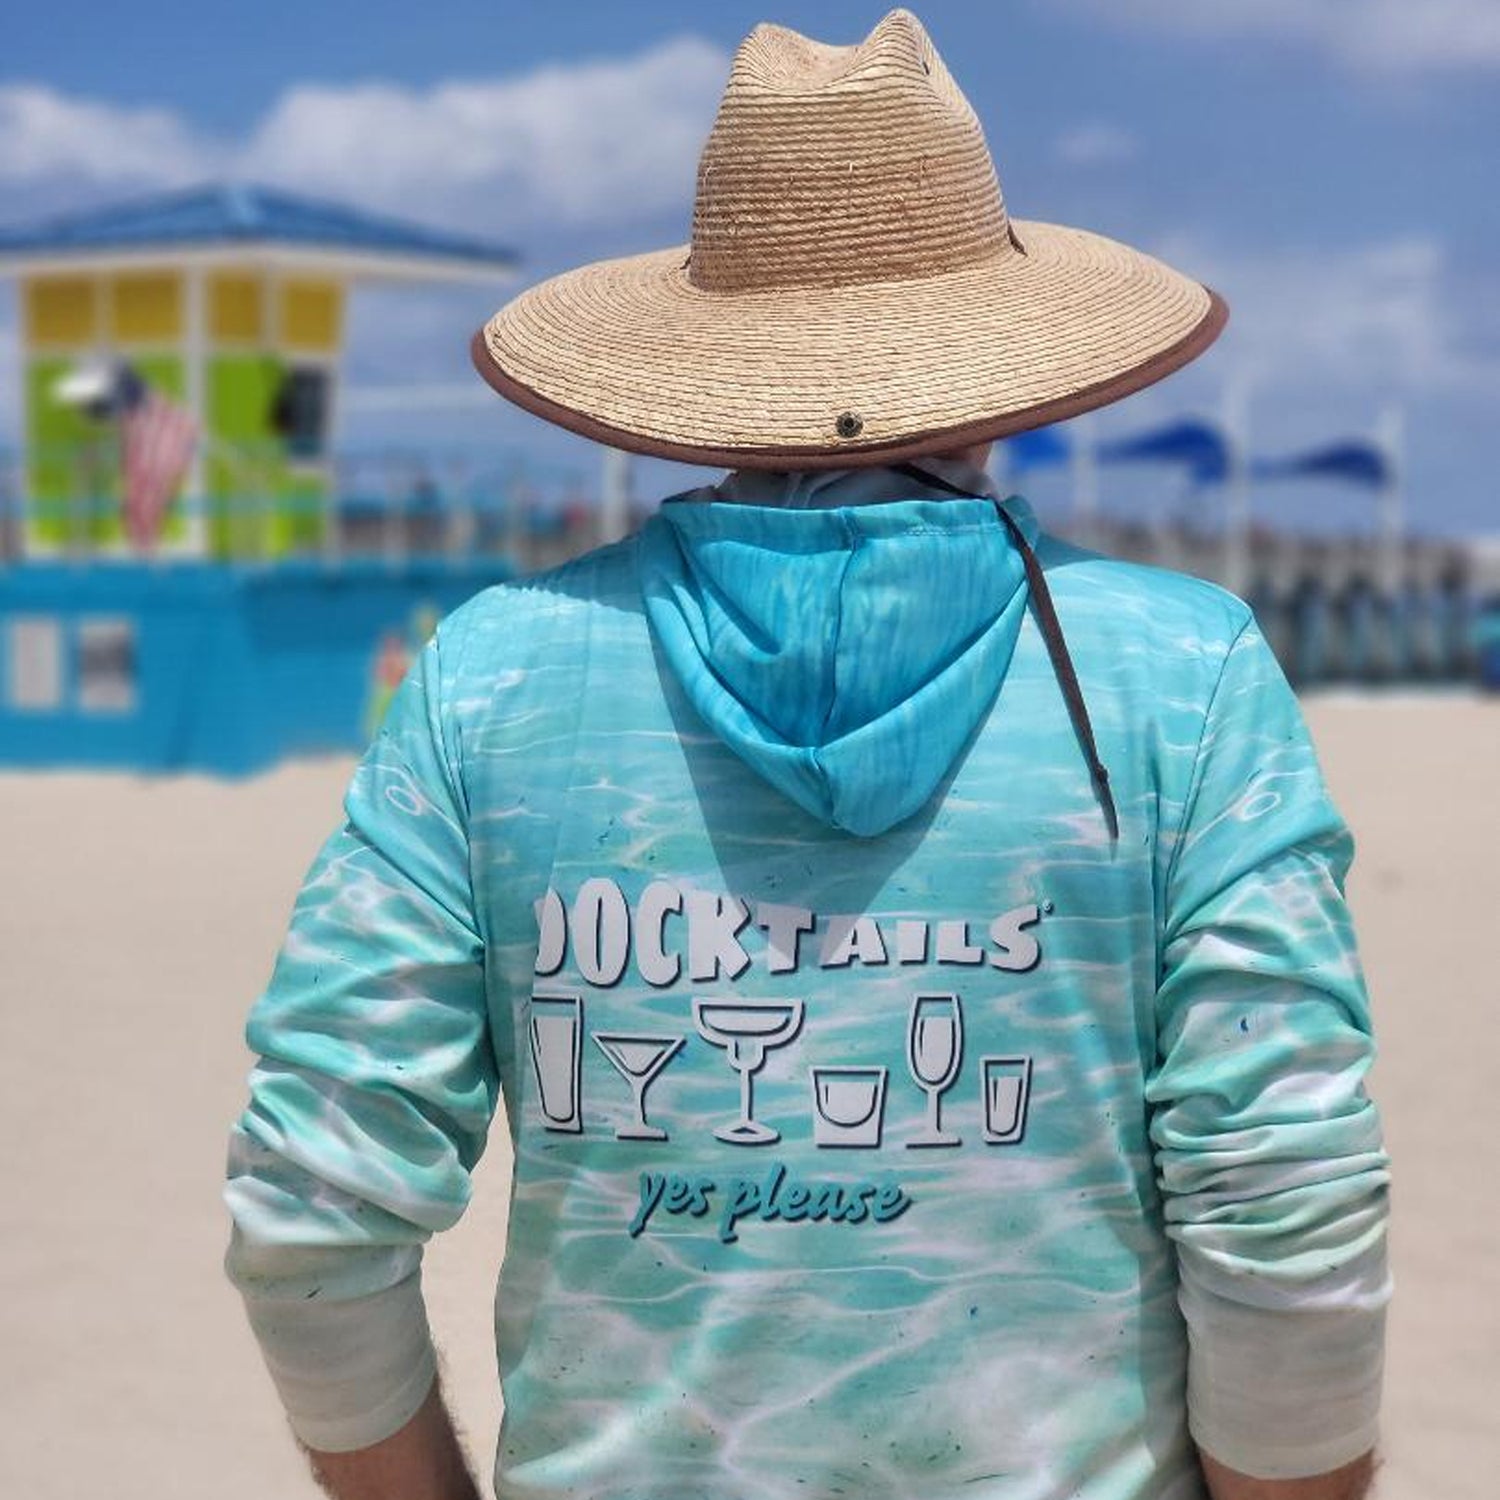 Docktails Caribbean Dreaming Sun Shirt at Pompano Beach Florida